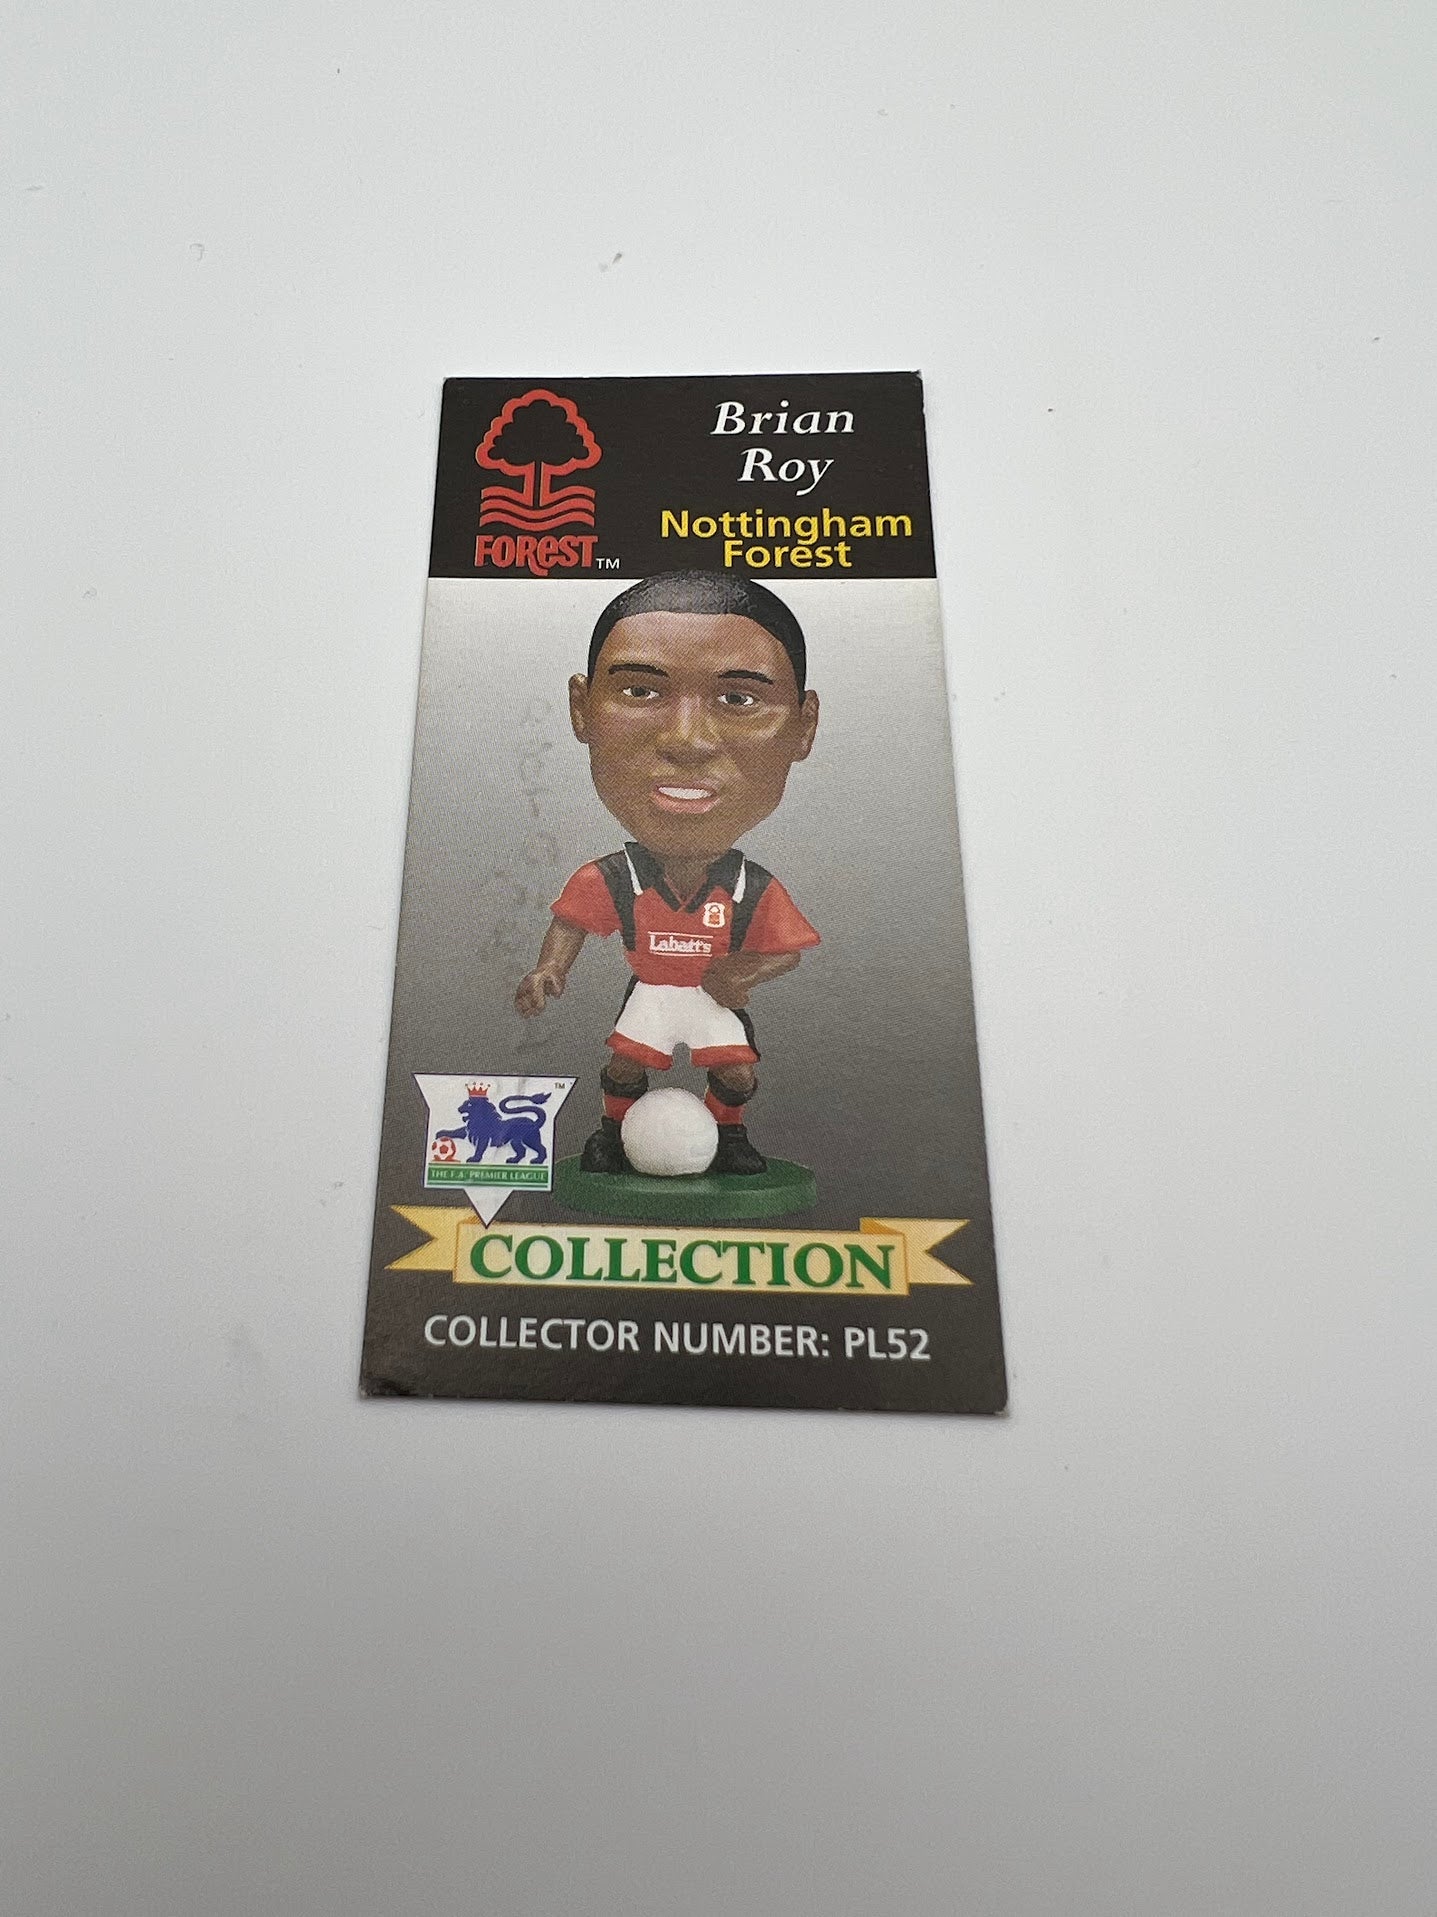 Bryan Roy Collector Card - Notingham Forest - Corinthian Figure Card - PL52